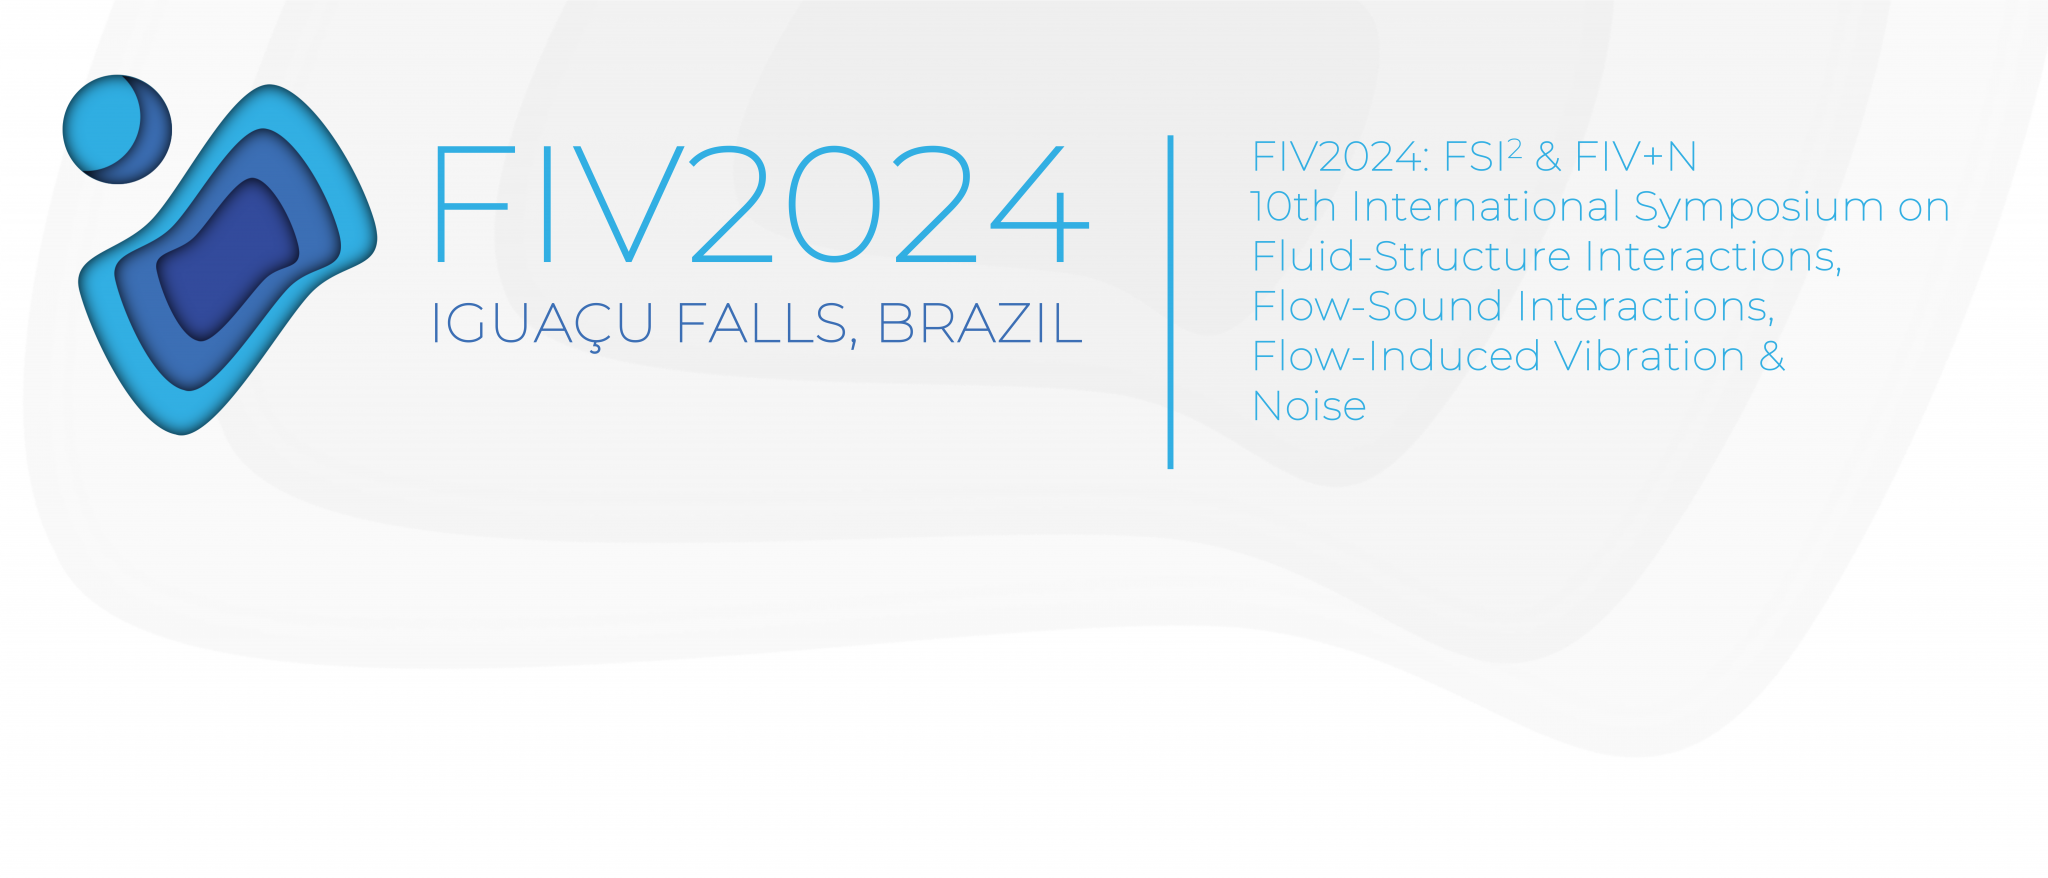 FIV2024 JULY 2024 IGUAÇU FALLS, BRAZIL 10th International